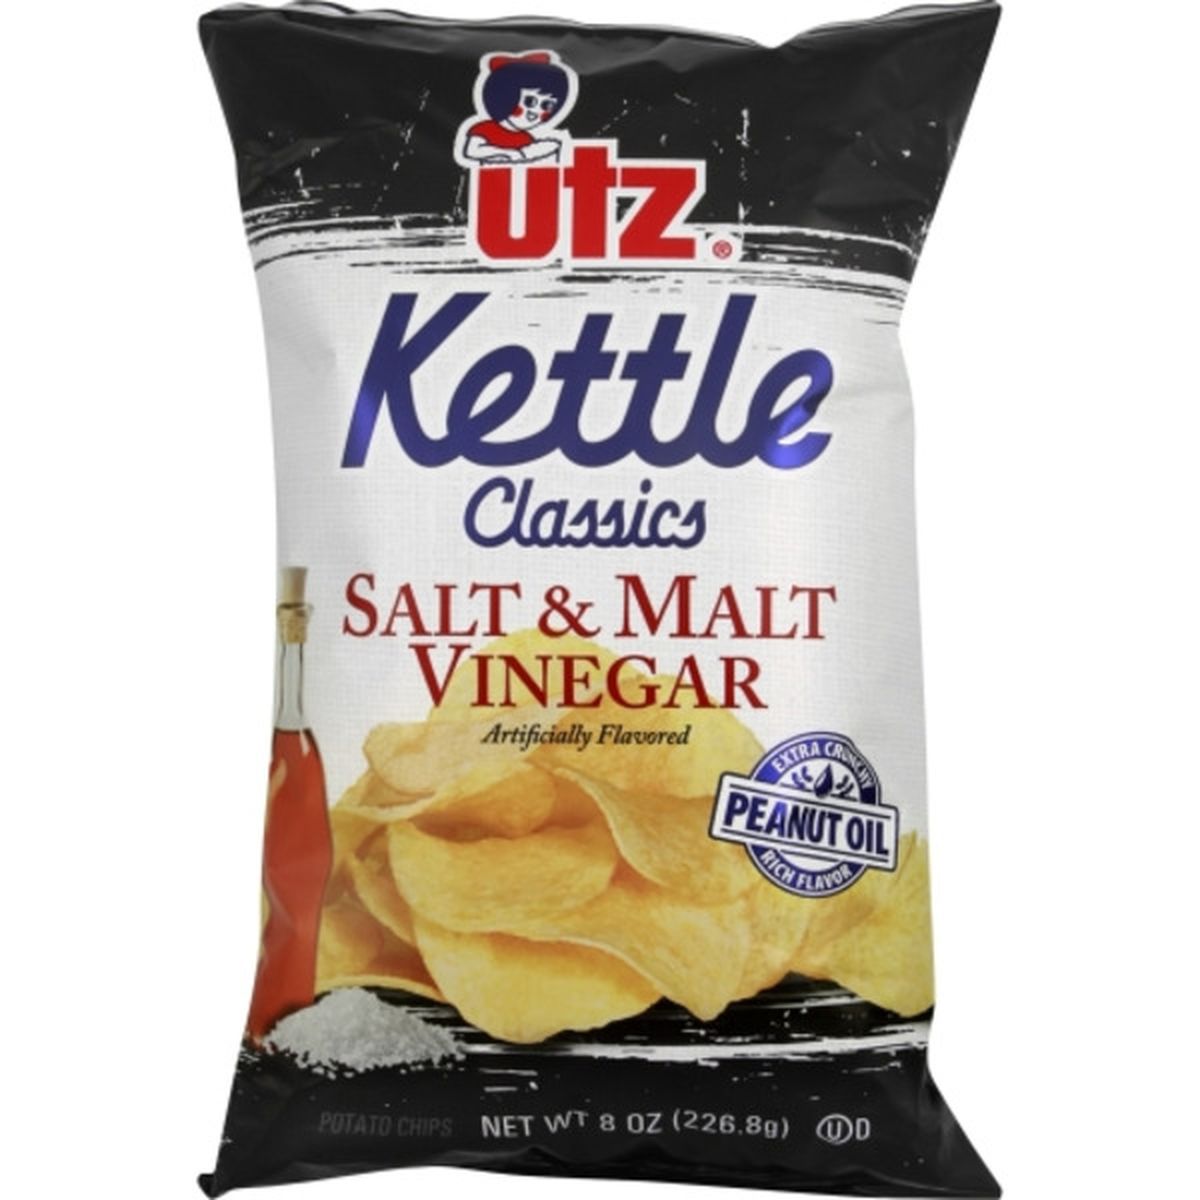 Calories in Utz Potato Chips, Kettle Classics, Salt & Malt Vinegar